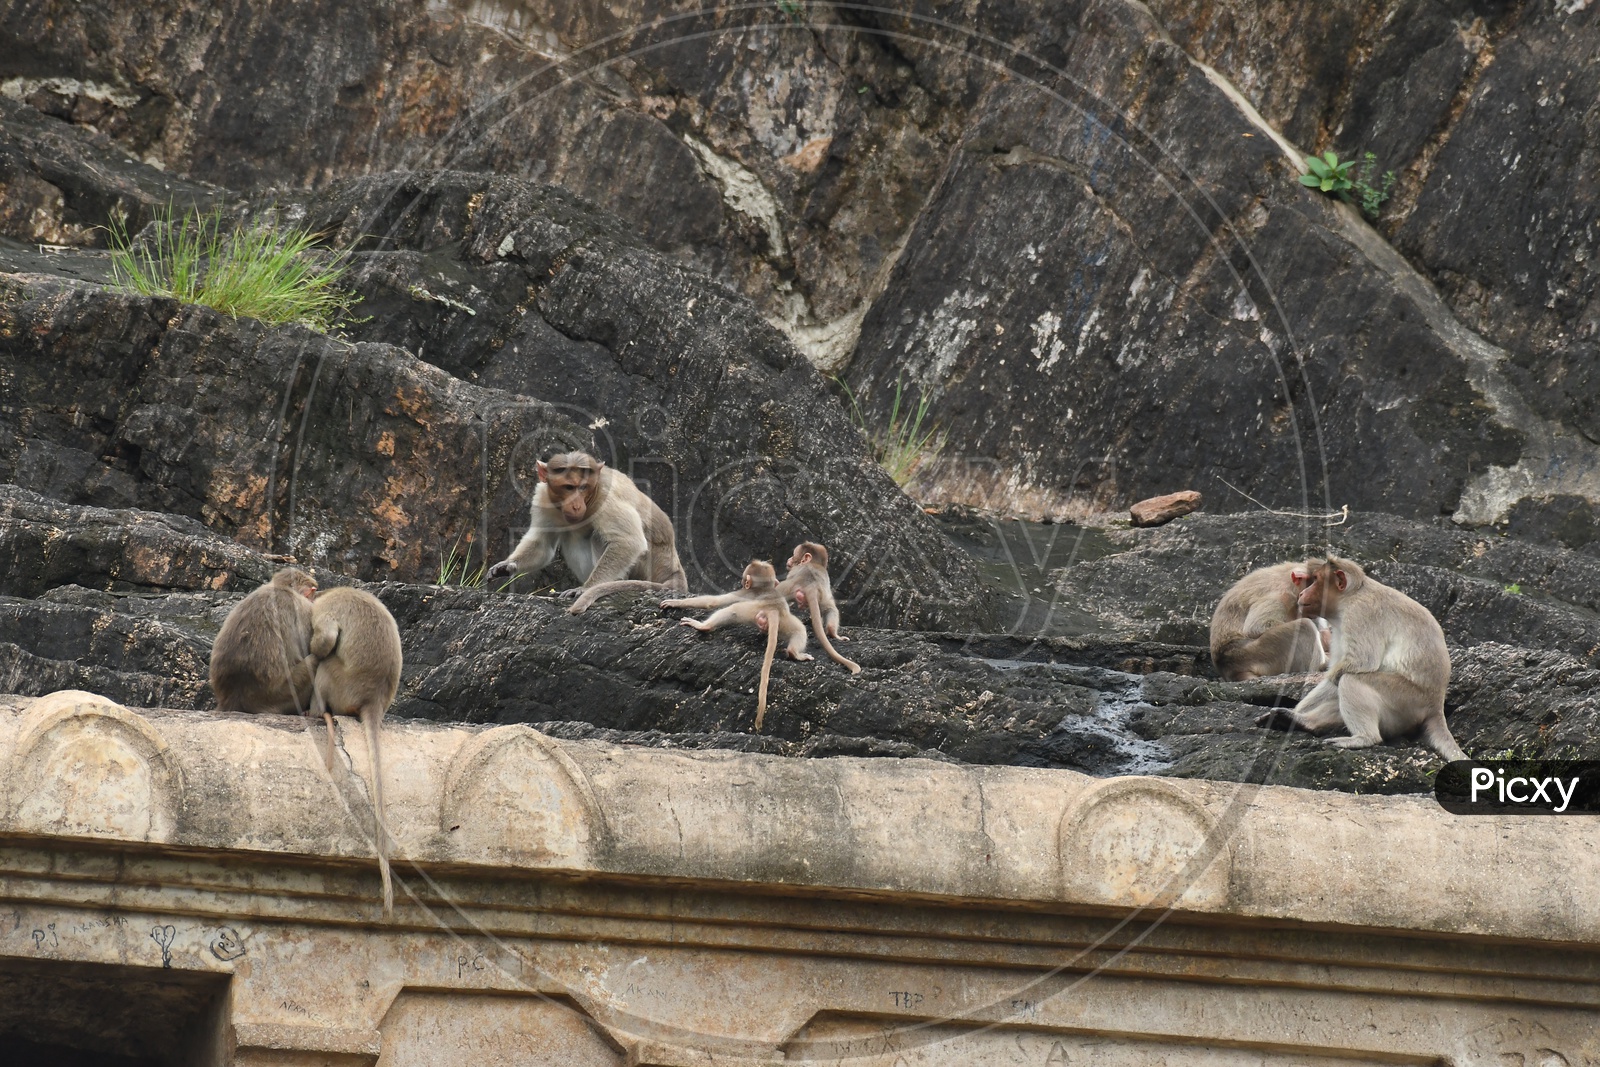 Monkeys on the temple